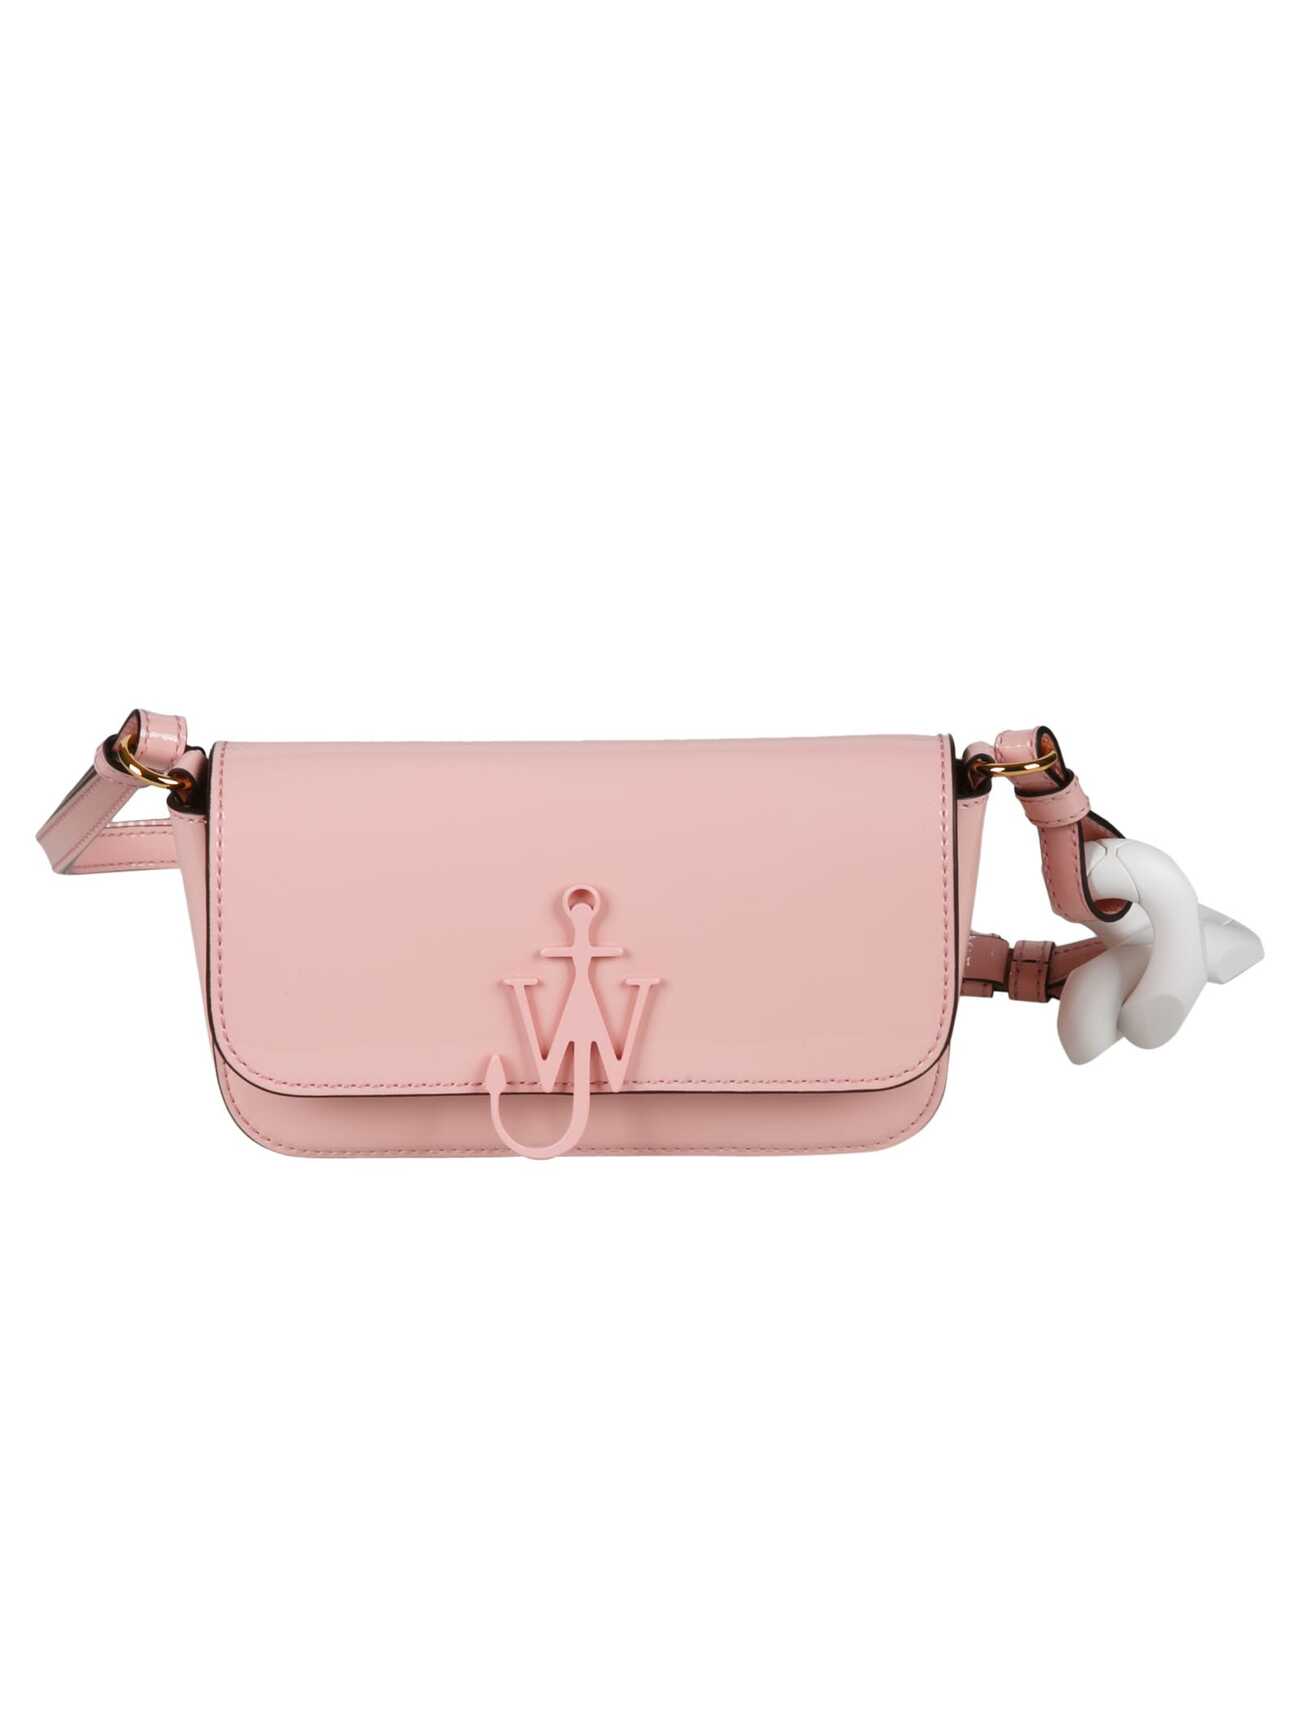 J.W. Anderson Chain Baguette Anchor Shoulder Bag in pink